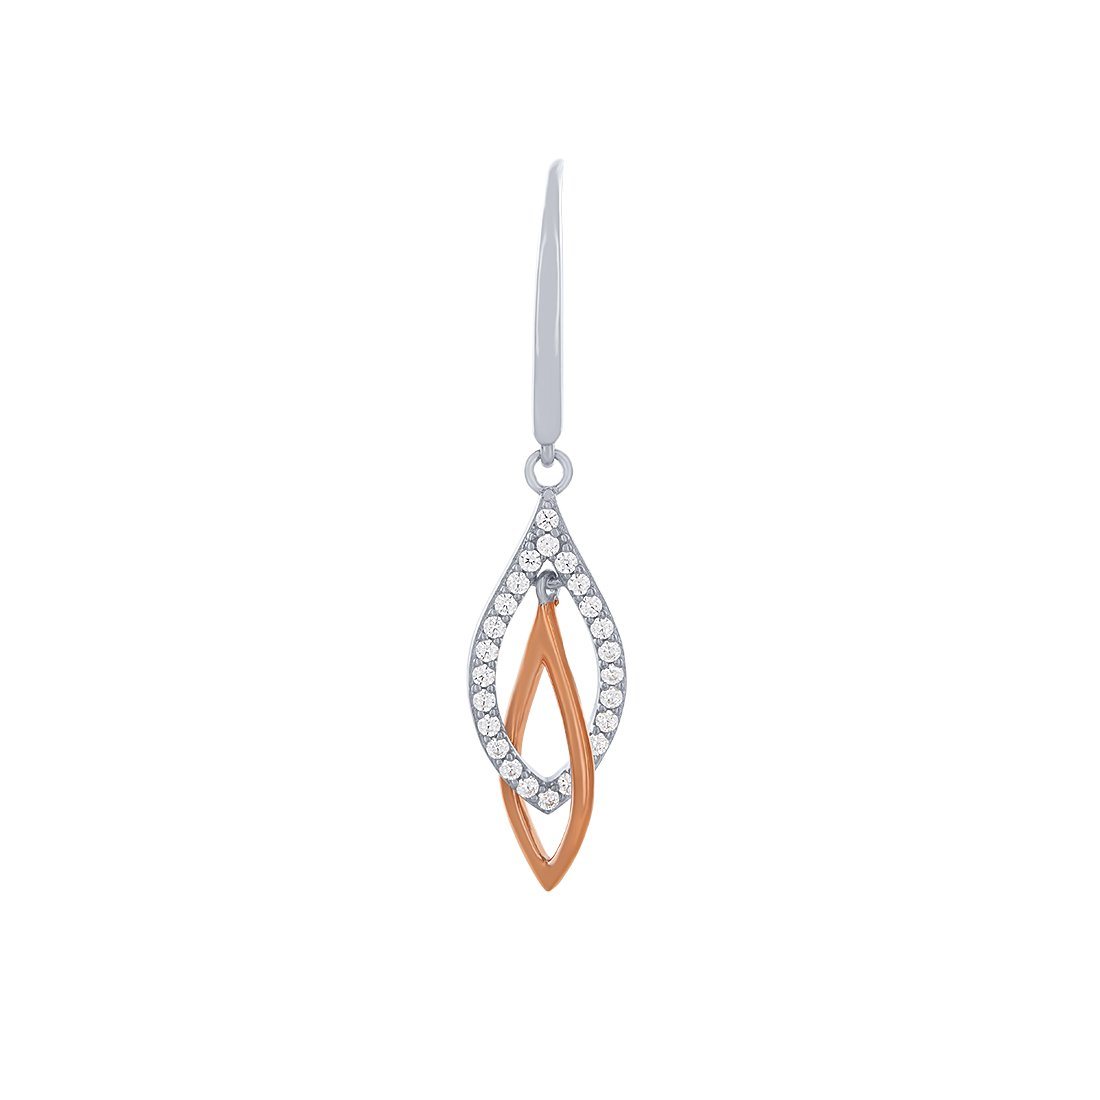 Drop Hook Earrings with Cubic Zirconia in Sterling Silver Earrings Bevilles 